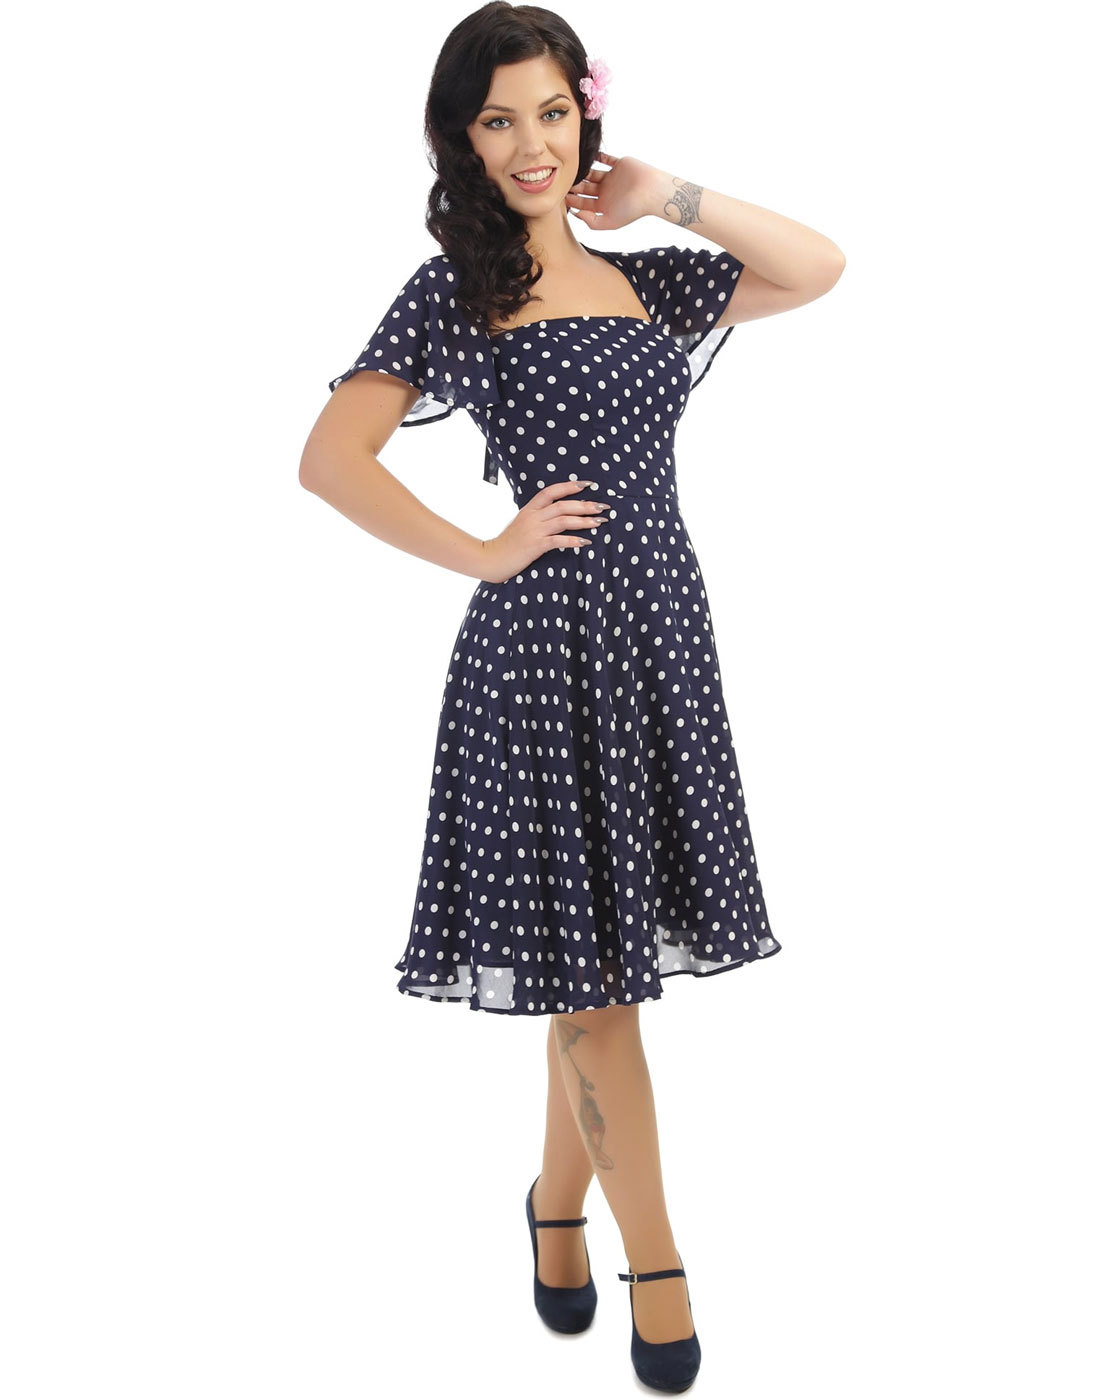 Collectif Vintage Juliet Retro 1950s Polka Dot Swing Dress Navy